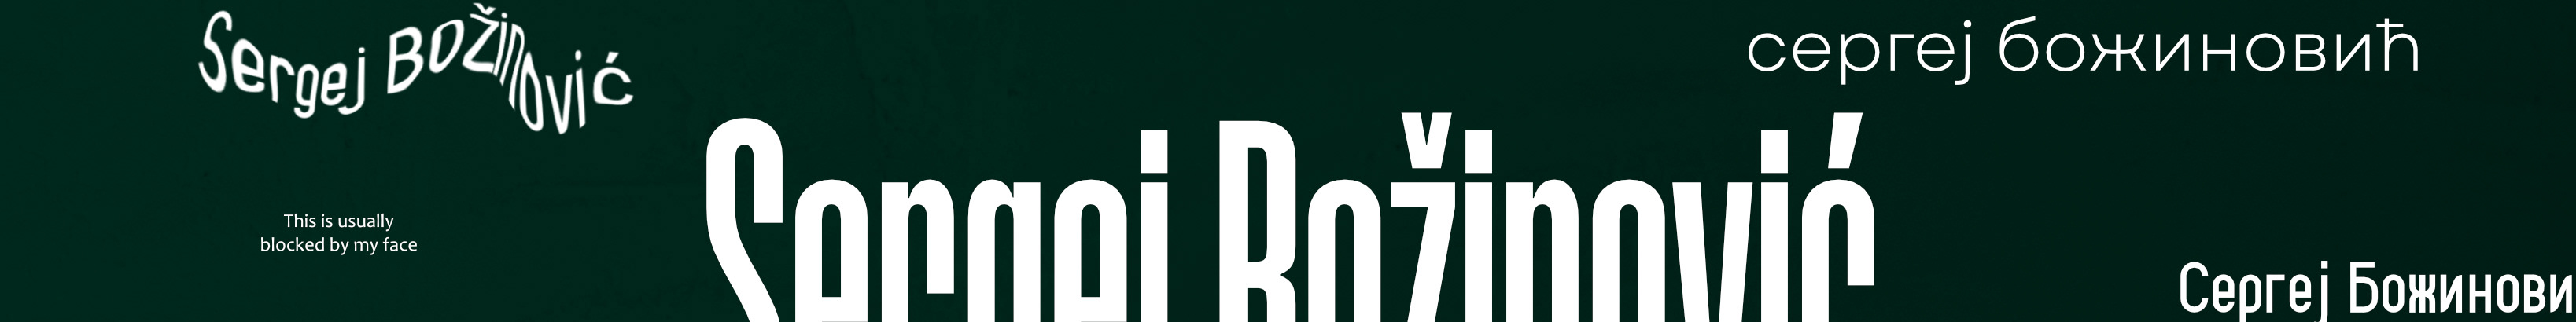 Banner de perfil de Sergej Božinović